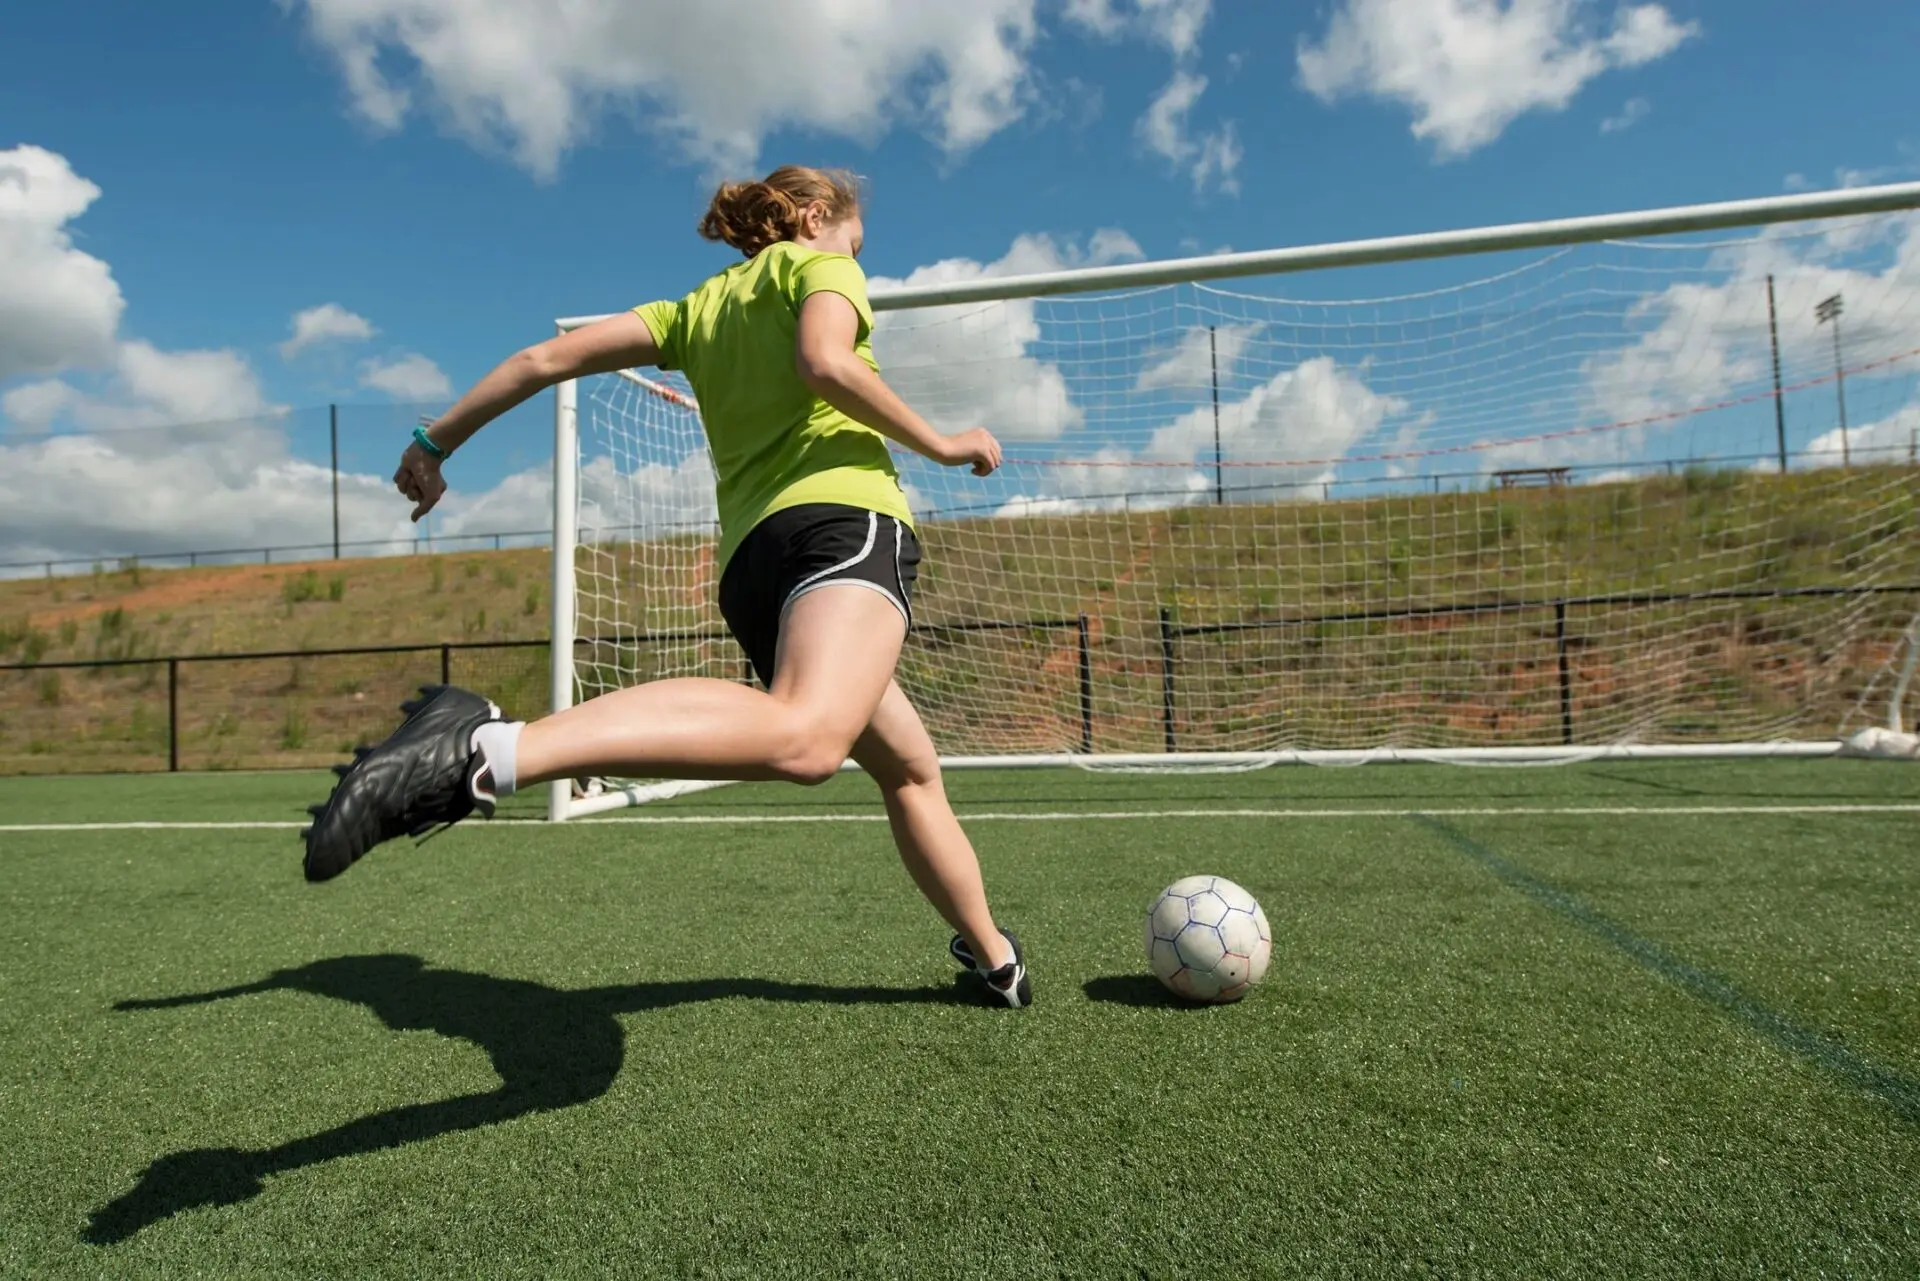 A teenage soccer player kicking the ball